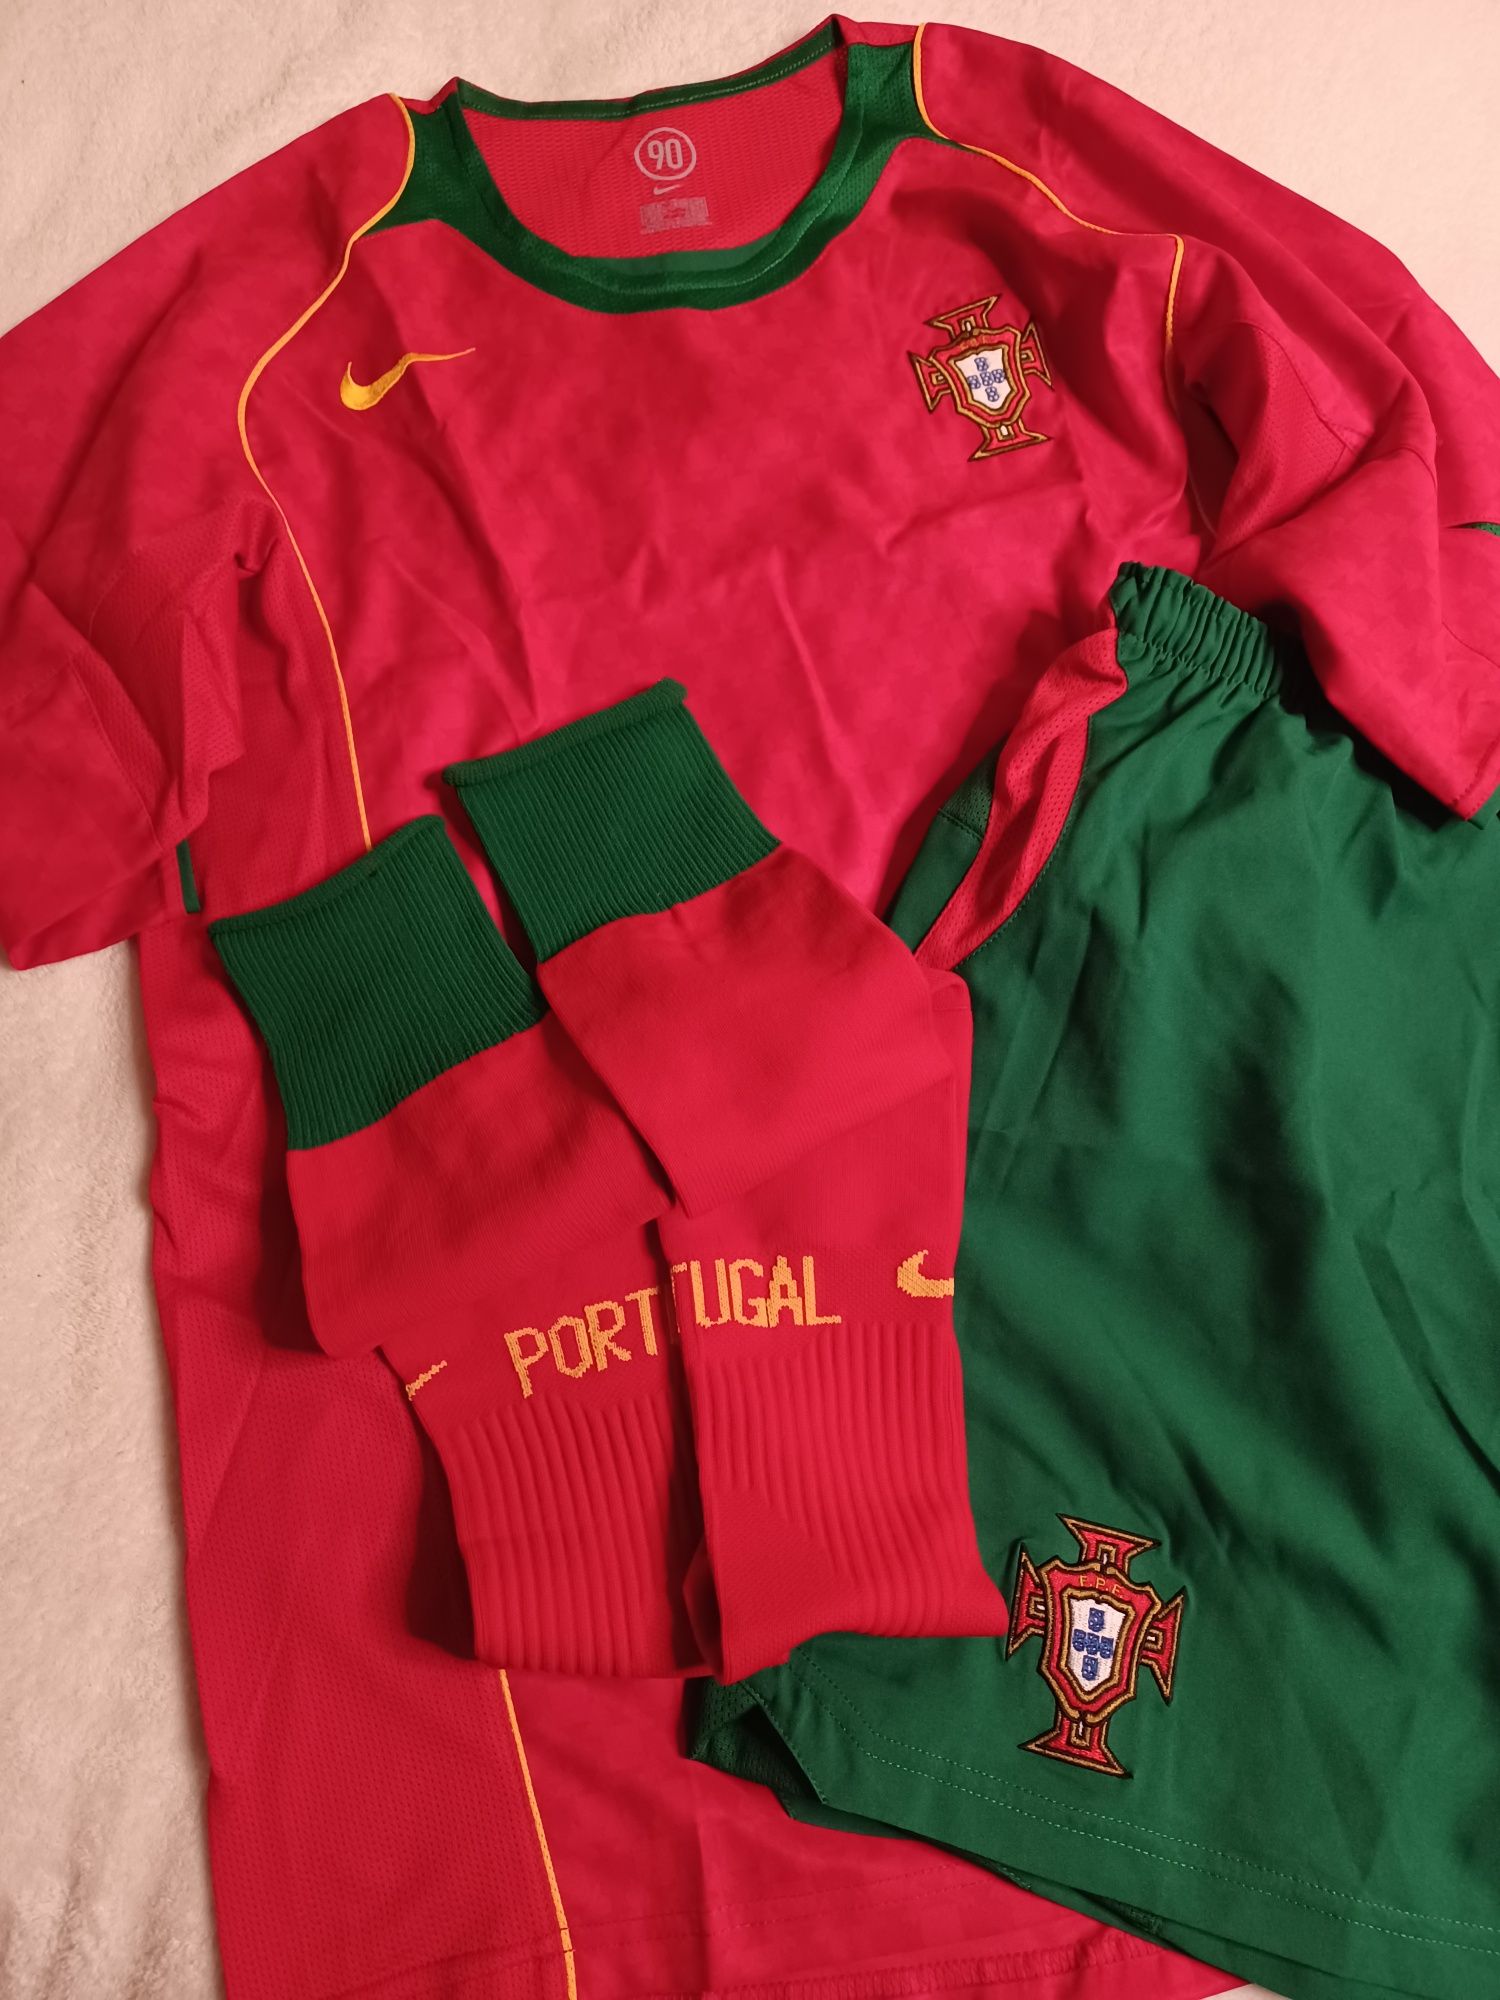 Equipamento Oficial de Portugal 2004/2006 (completo)